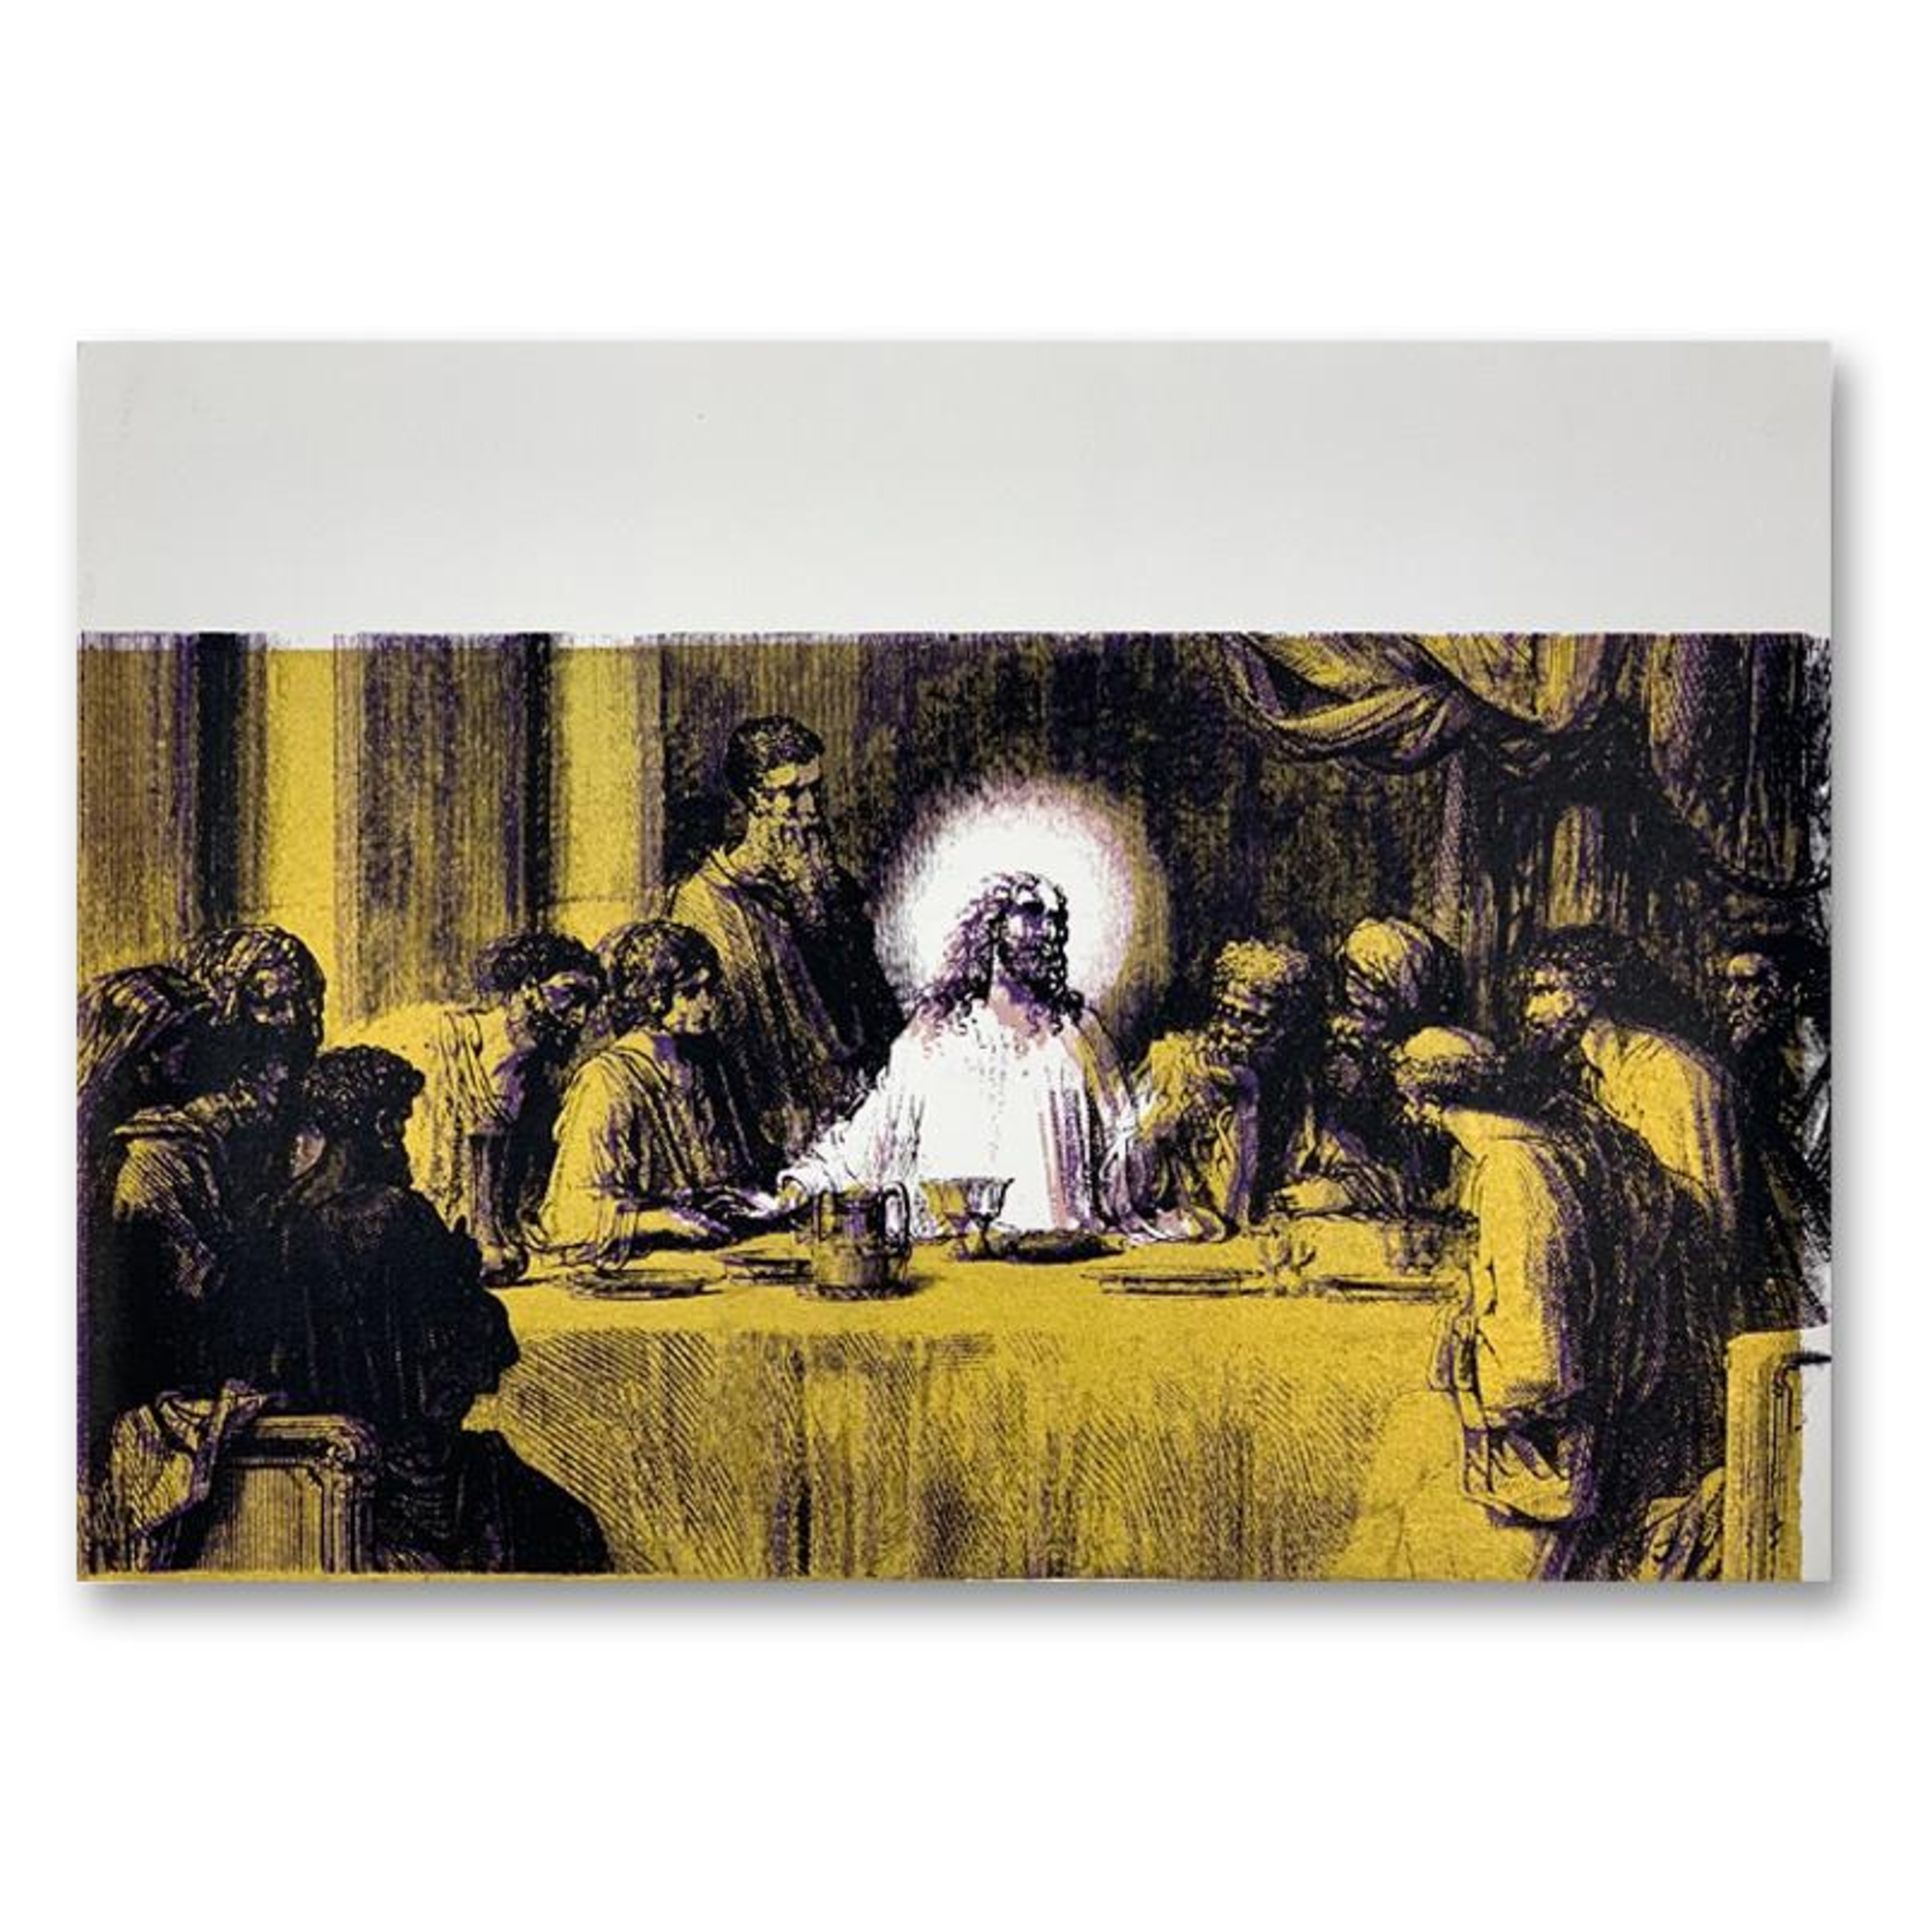 Jesus Last Supper by Steve Kaufman (1960-2010)